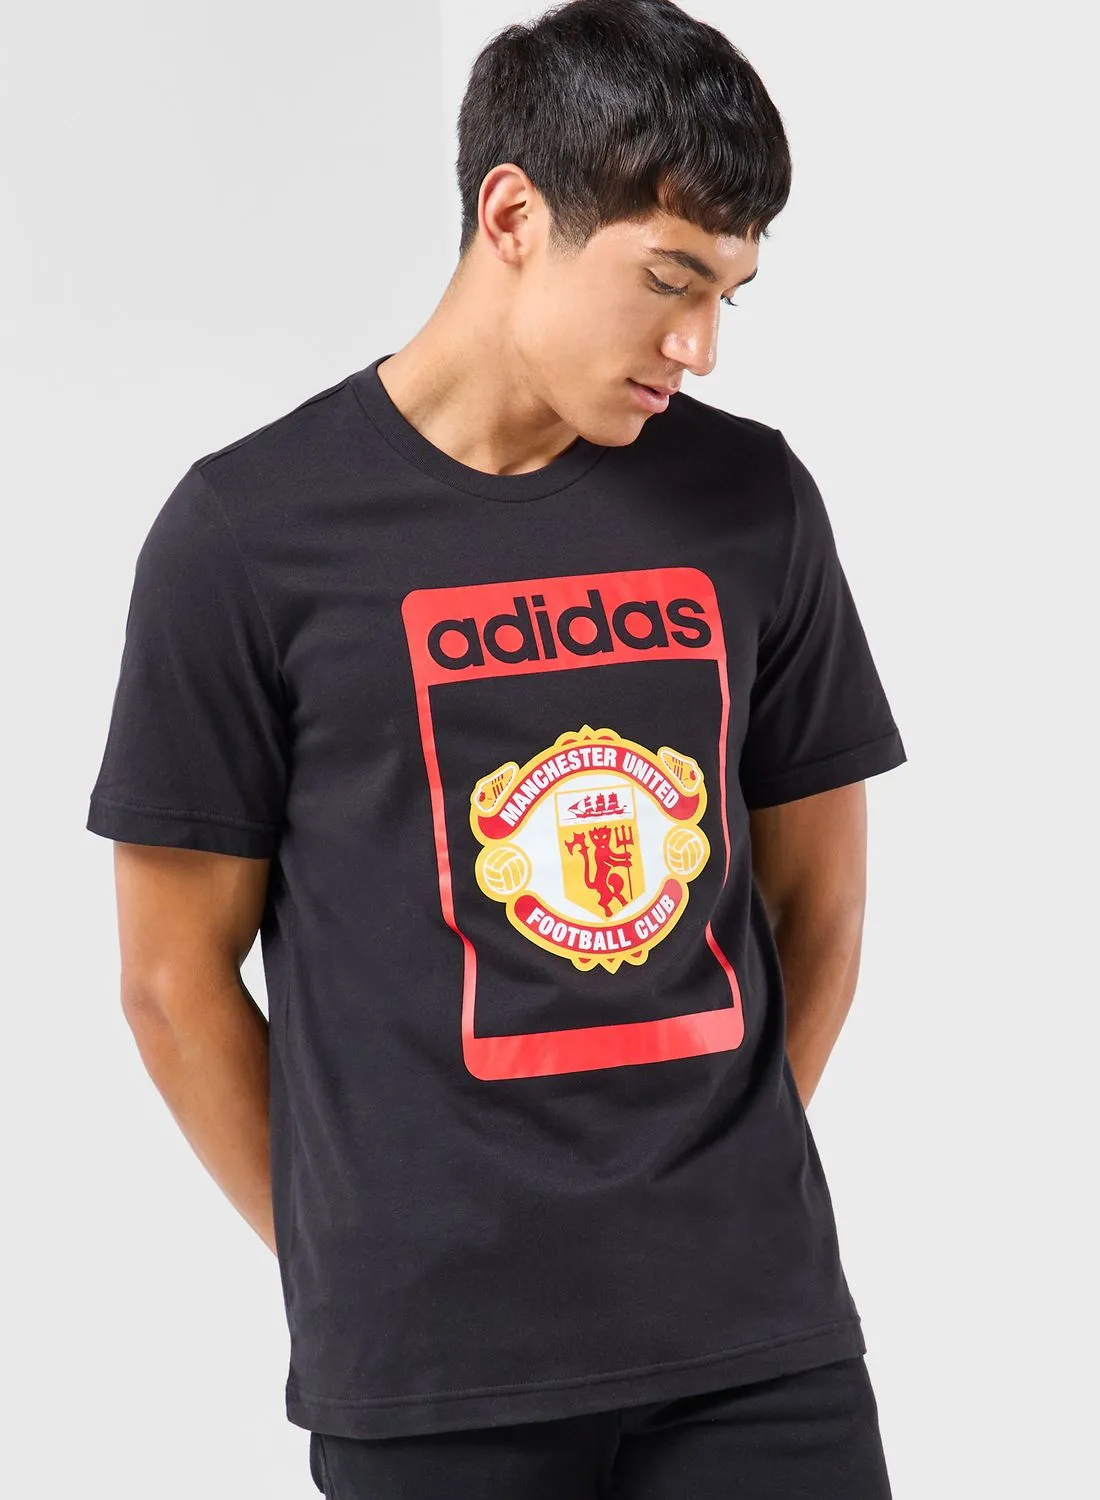 adidas Originals Manchester United T-Shirt